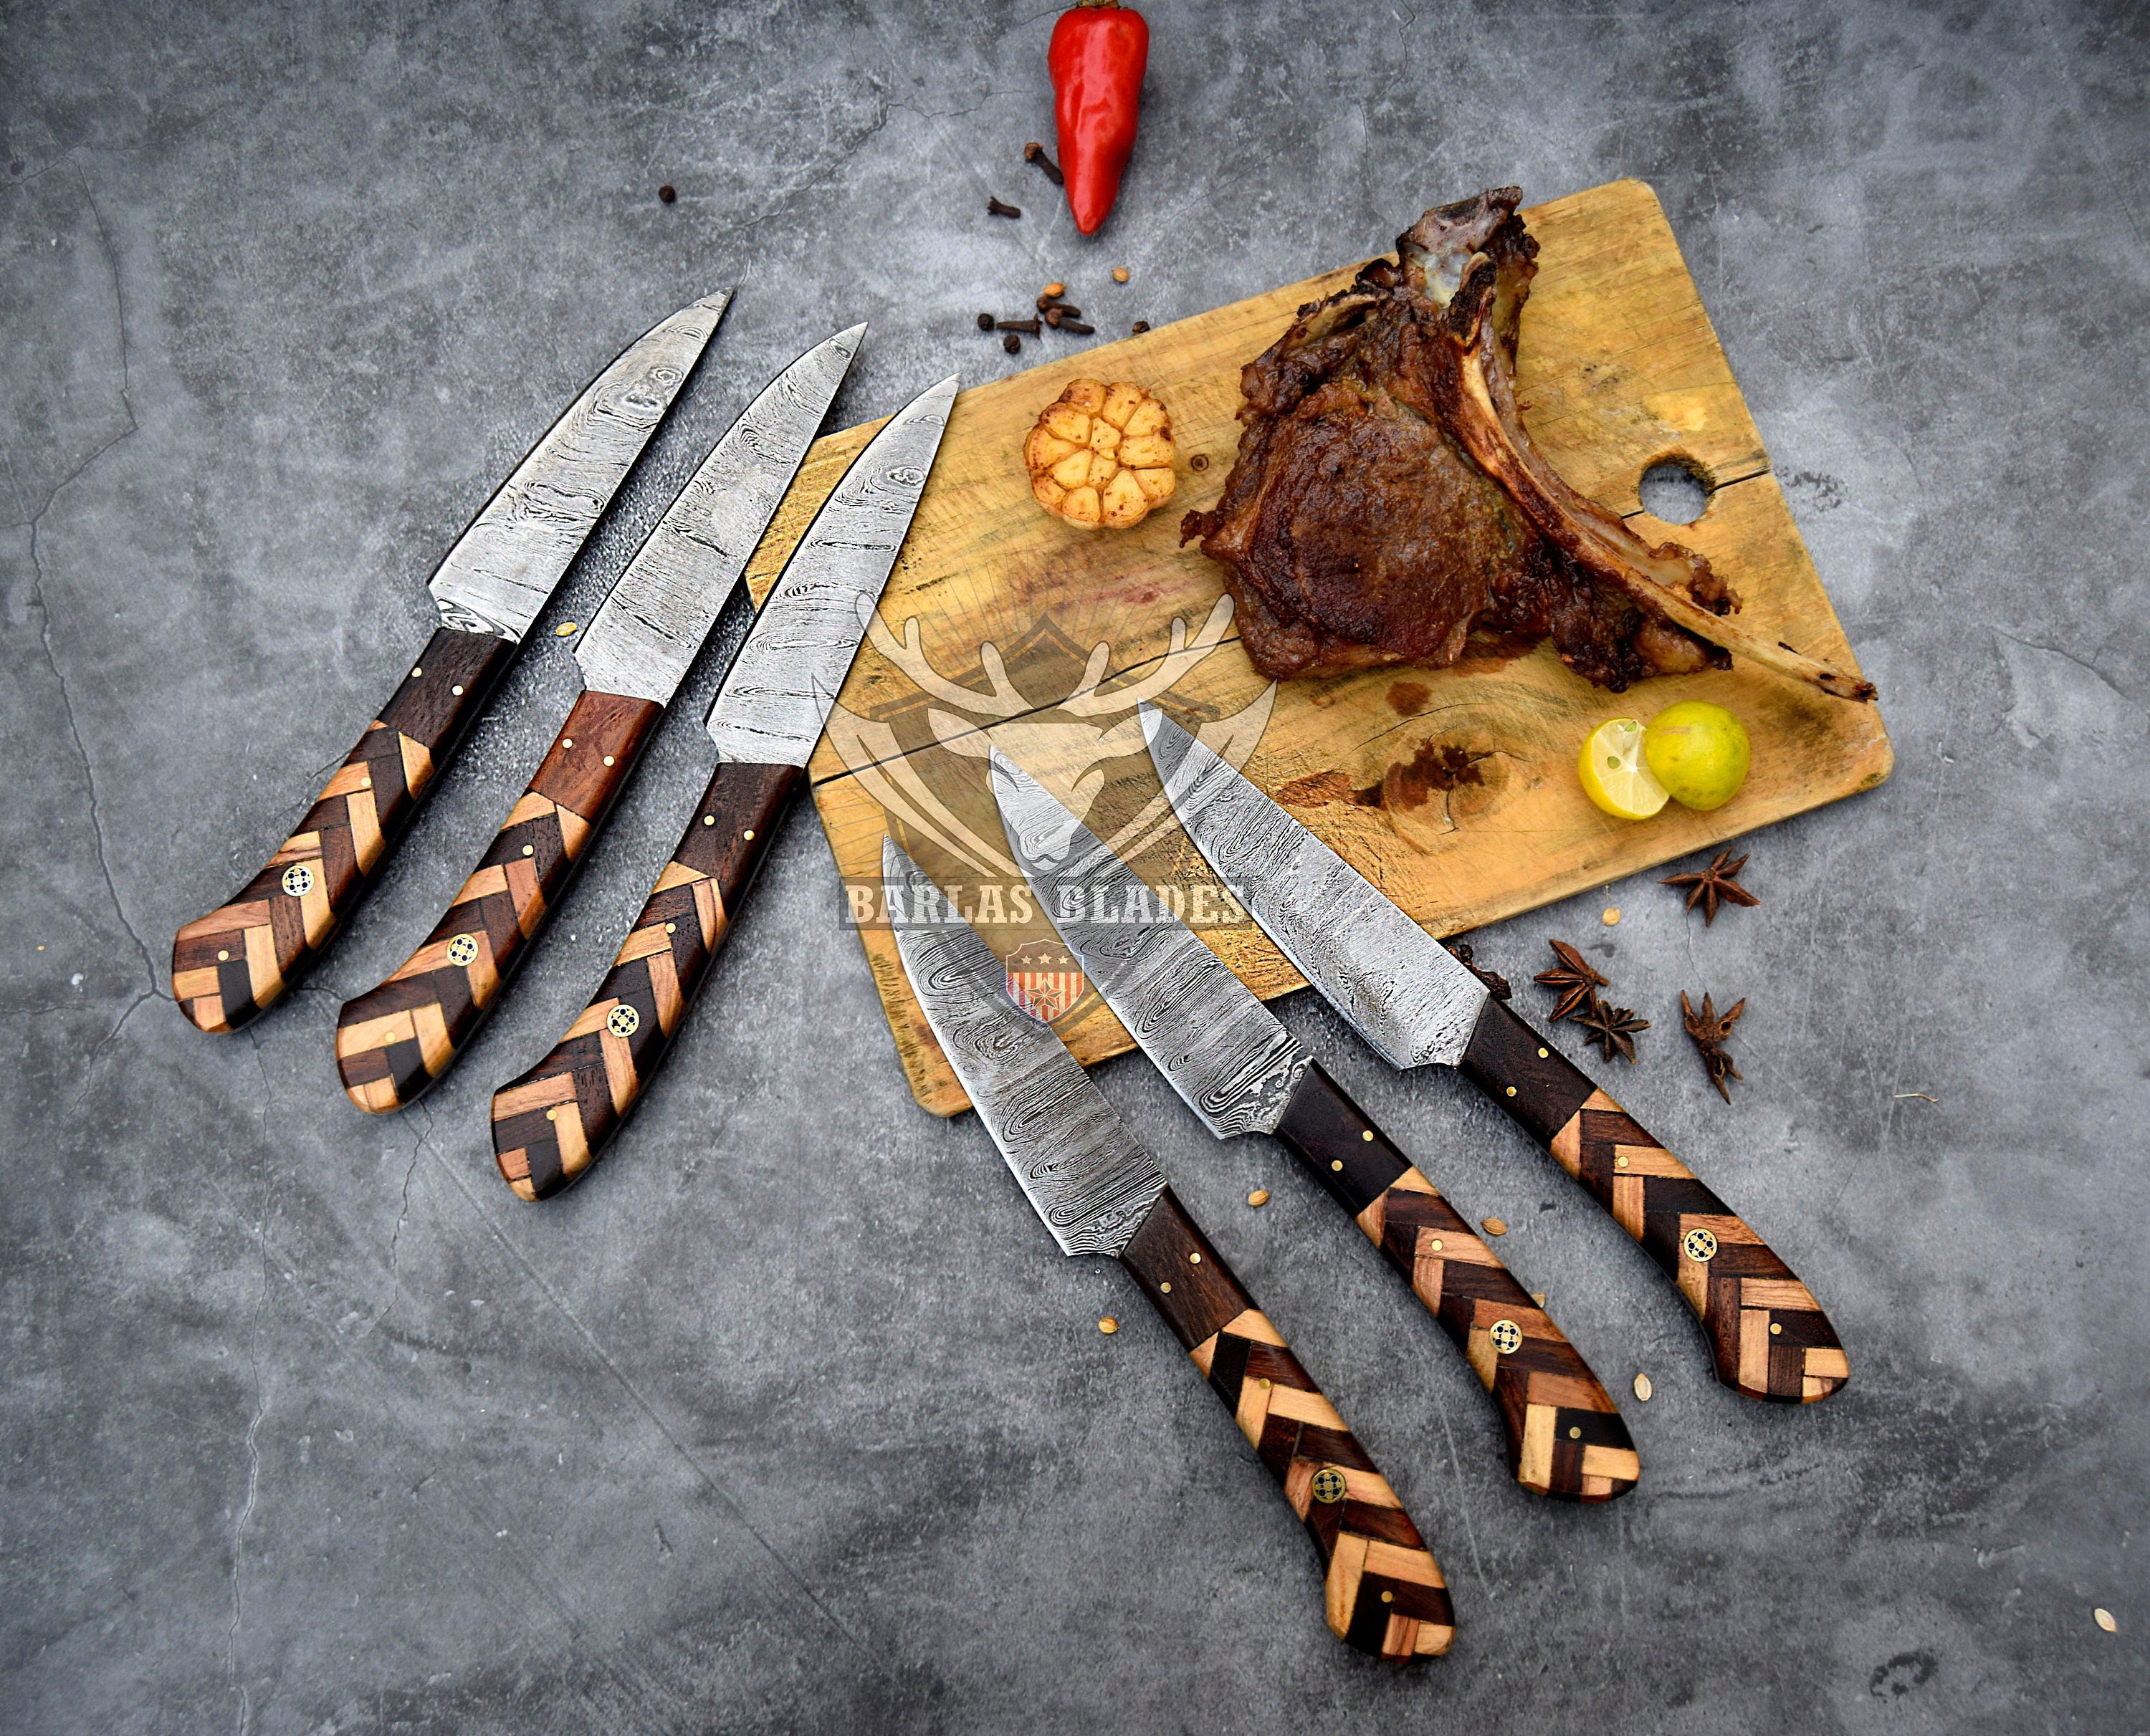 Cucina Napoli 6 Piece Damascus Print Steak Knife Set